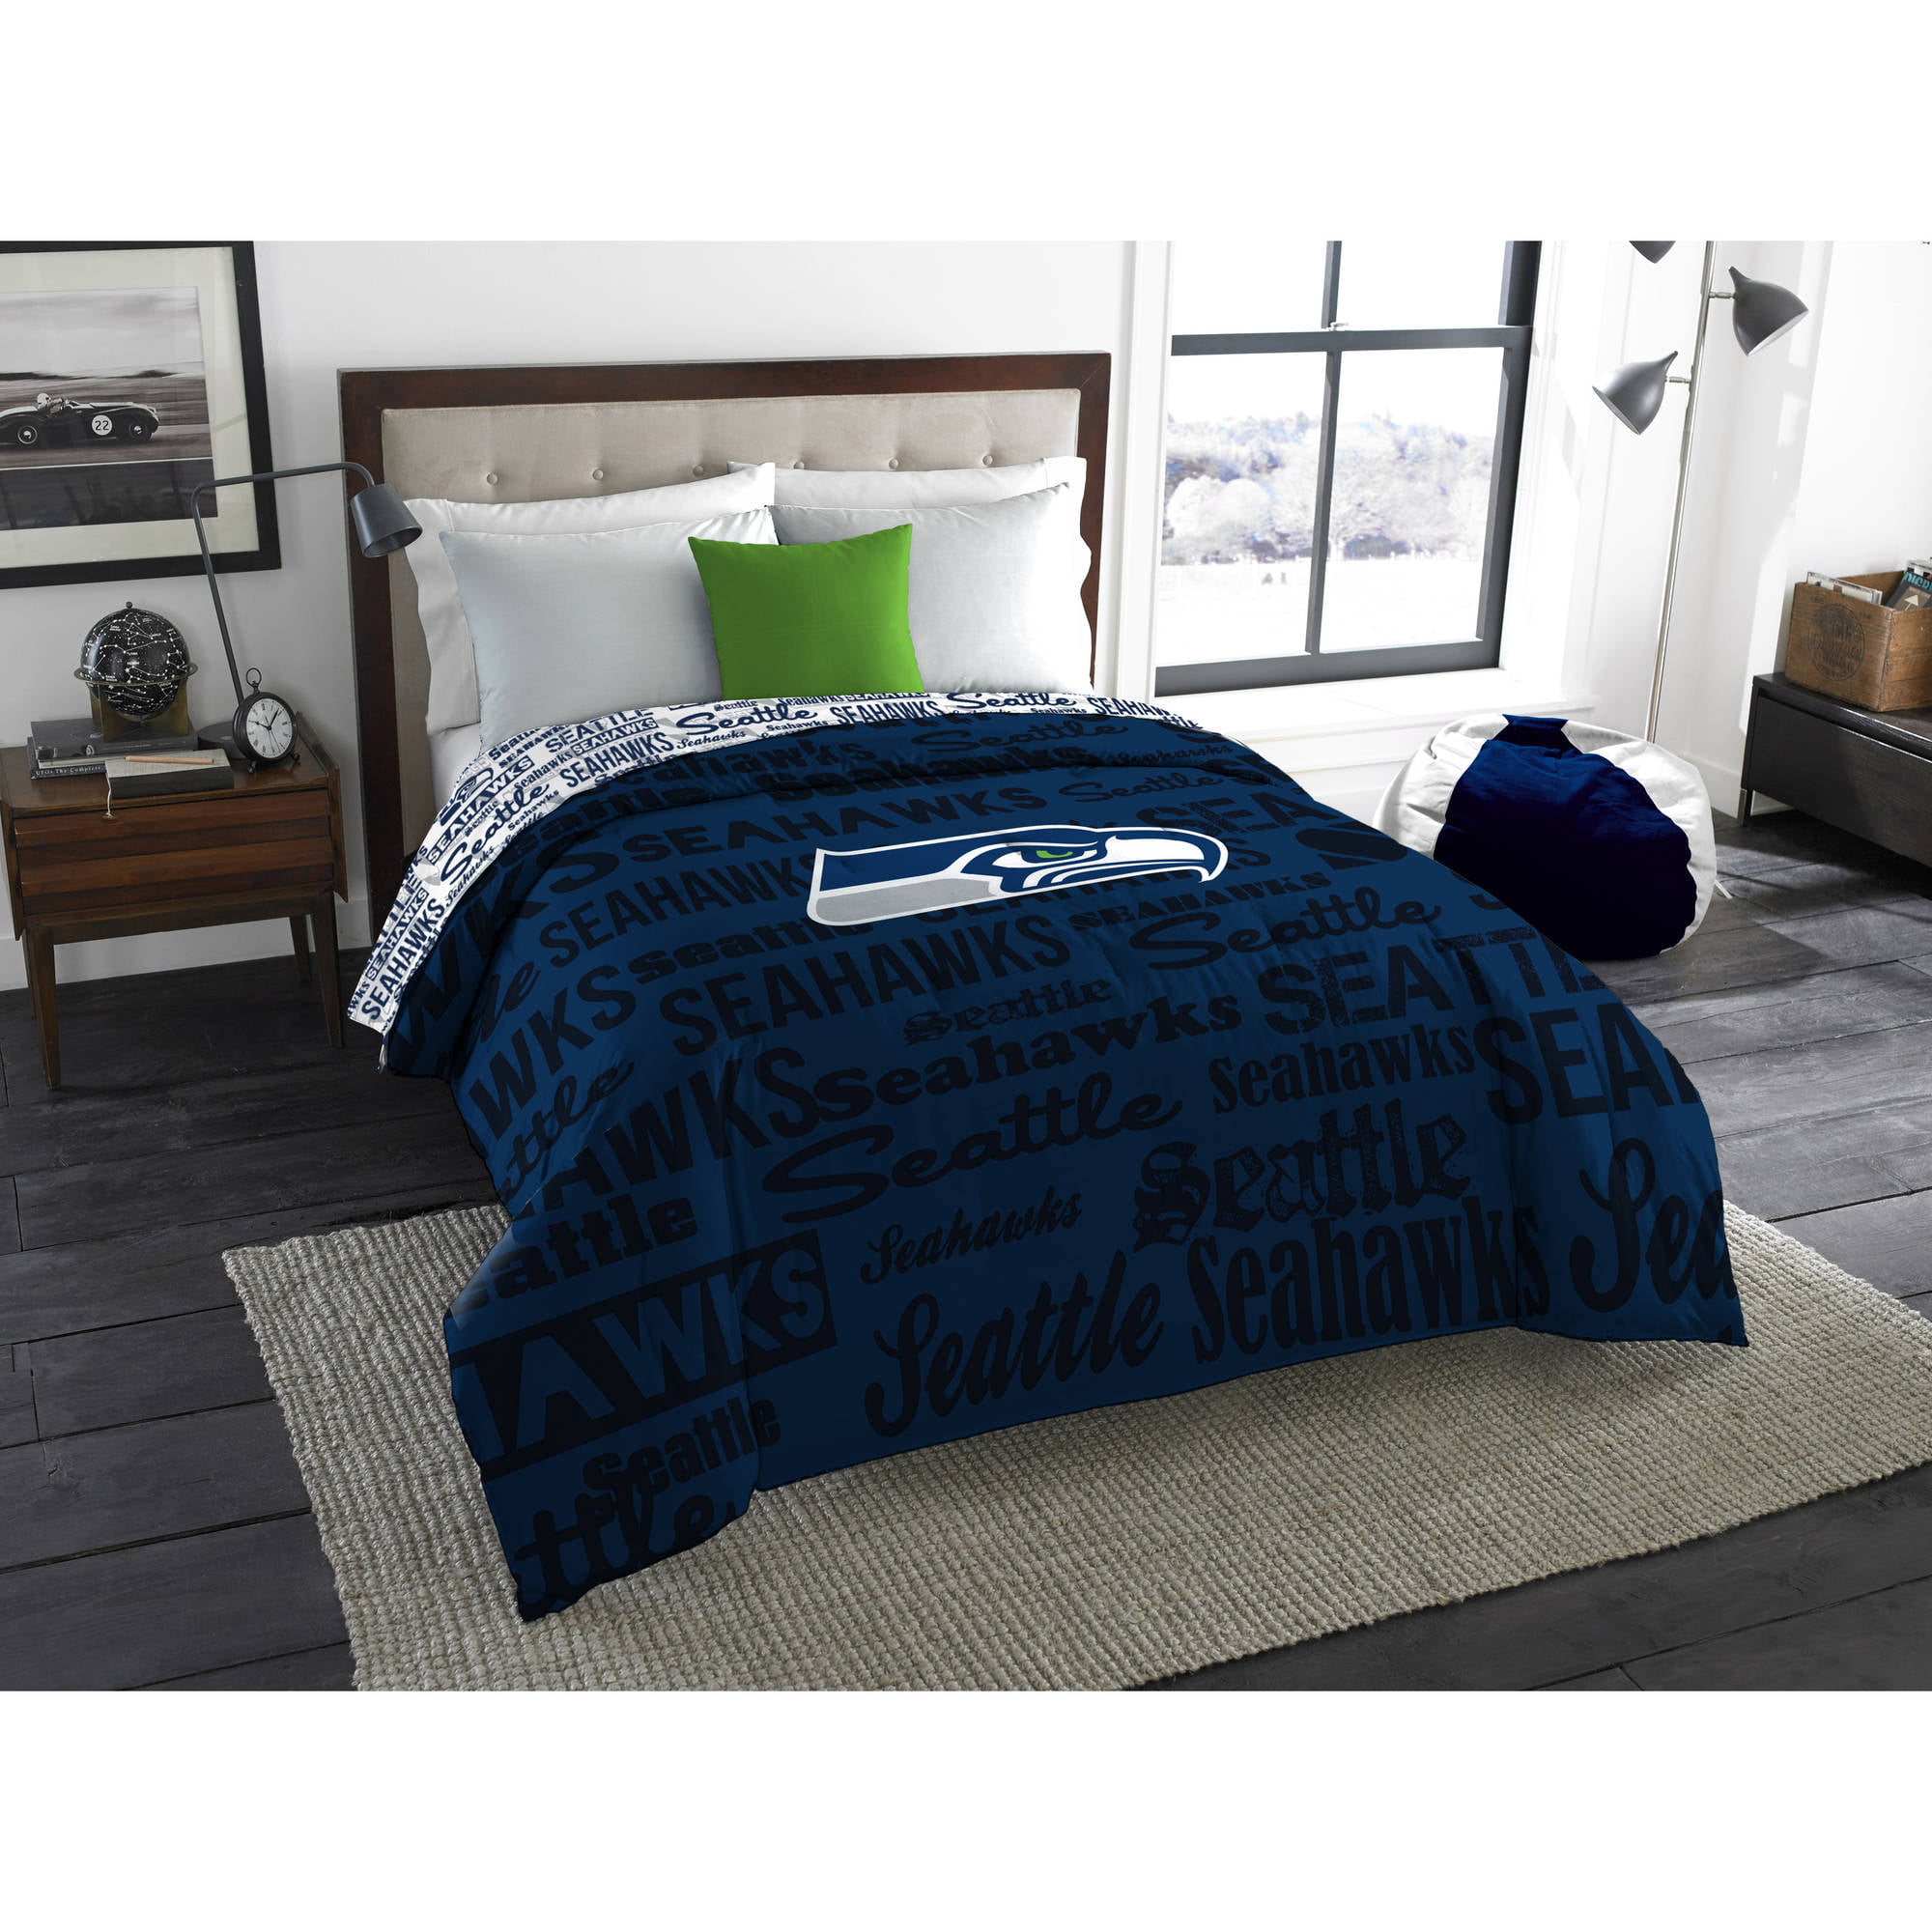 NFL Seattle Seahawks 'Anthem' Twin & Full Bedding Comforter Set, 1 Each 